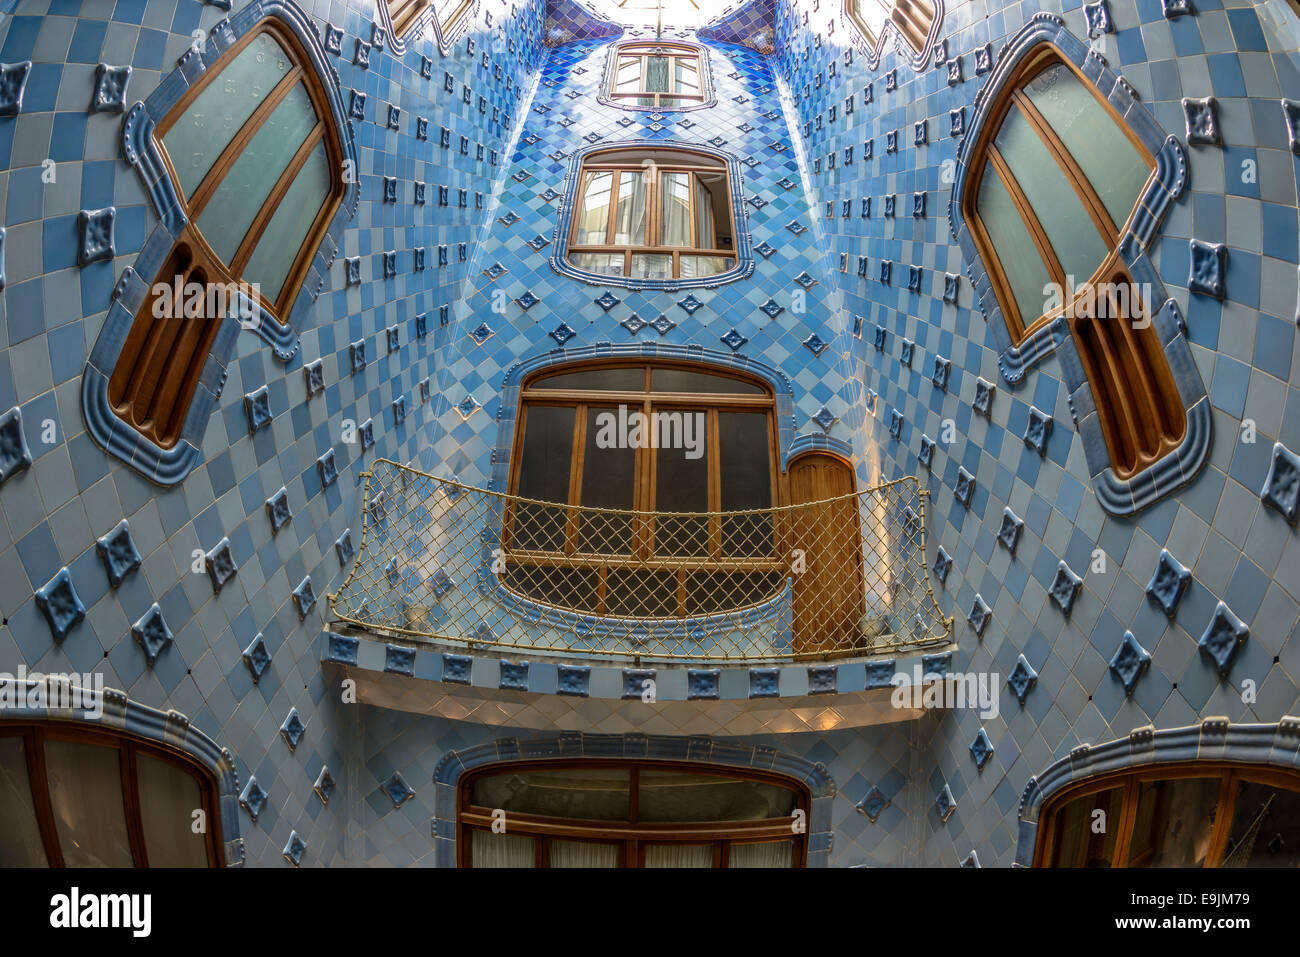 The interior of the famous casa Battlo building designed by Antonio Gaudi in Barcelona, Spain Stock Photo